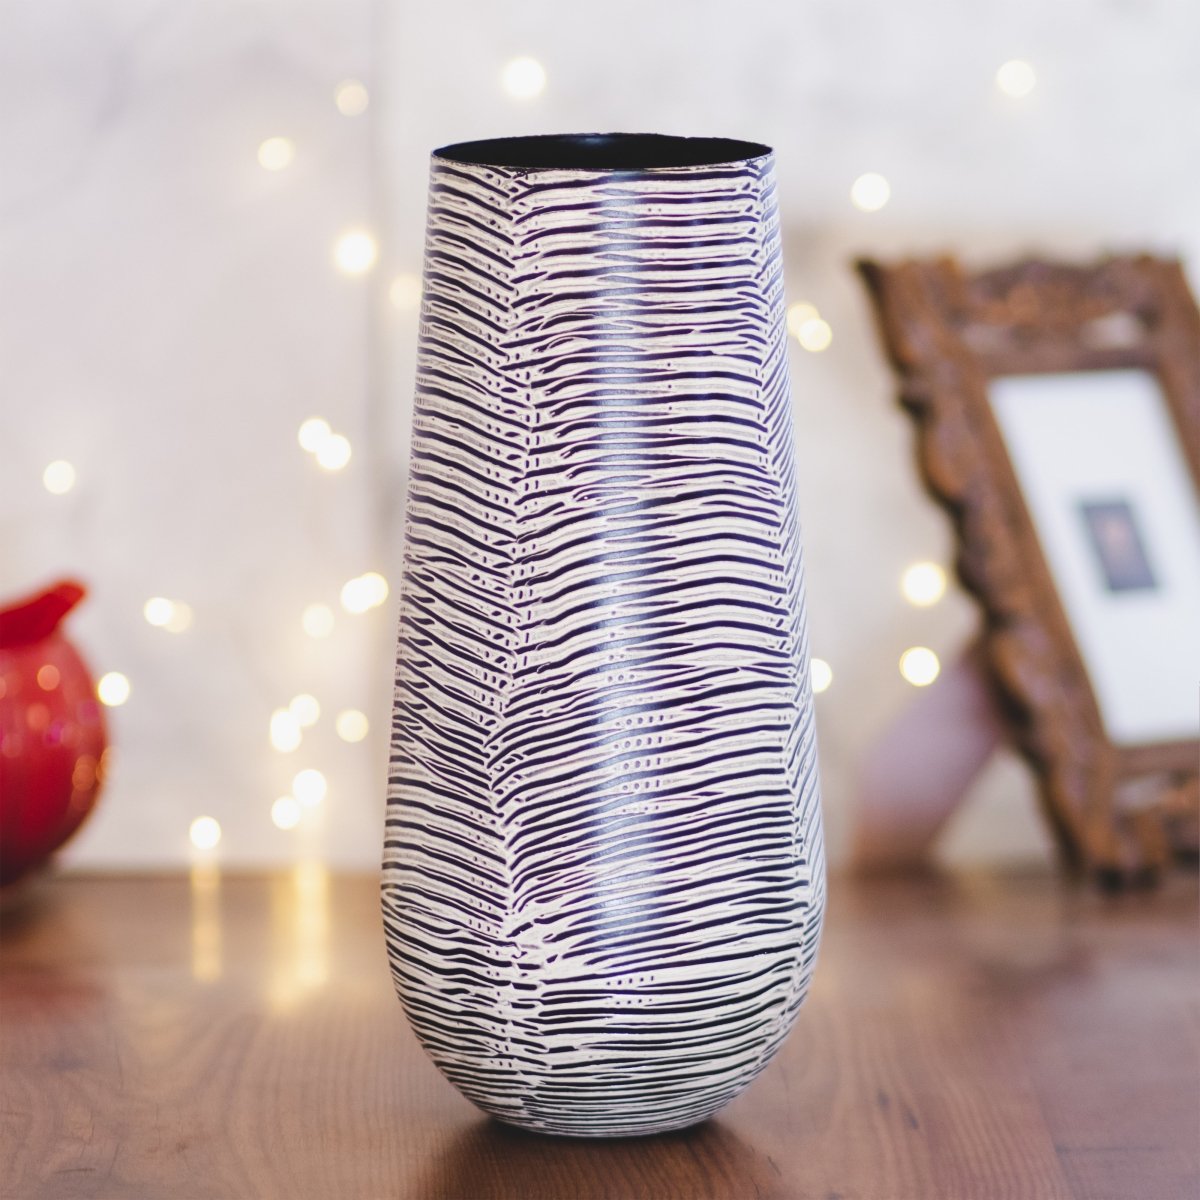 Kezevel Metal Decorative Vase - Antique White Black Textured Pattern Handcrafted Cylindrical Metal Vases for Home Decor